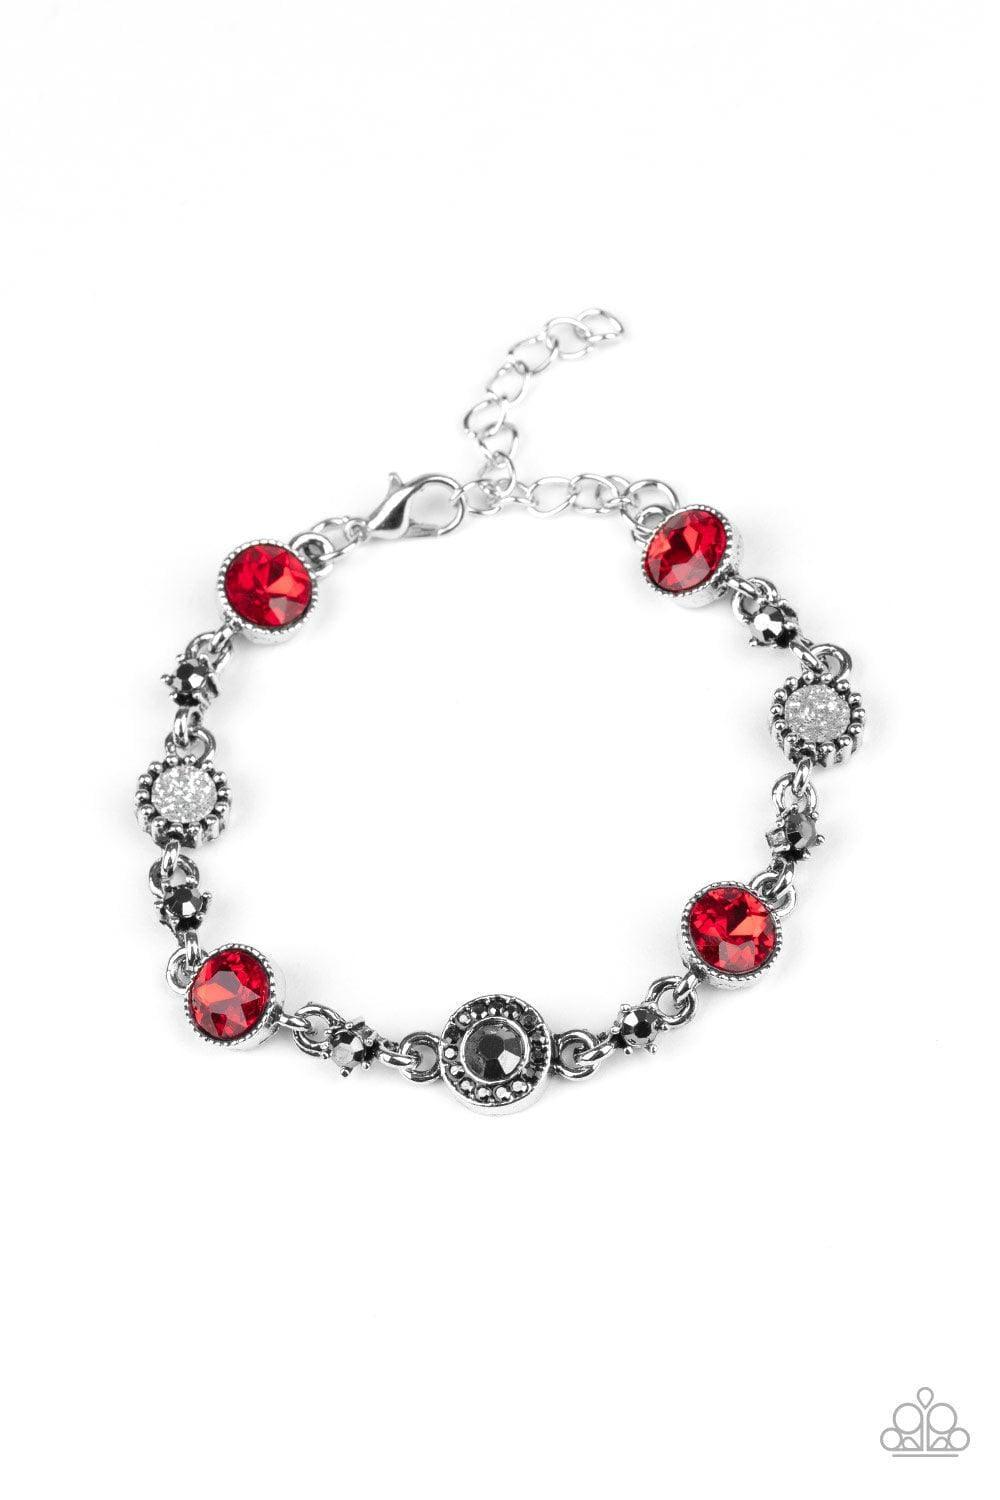 Paparazzi Accessories - Stargazing Sparkle - Red Bracelet - Bling by JessieK